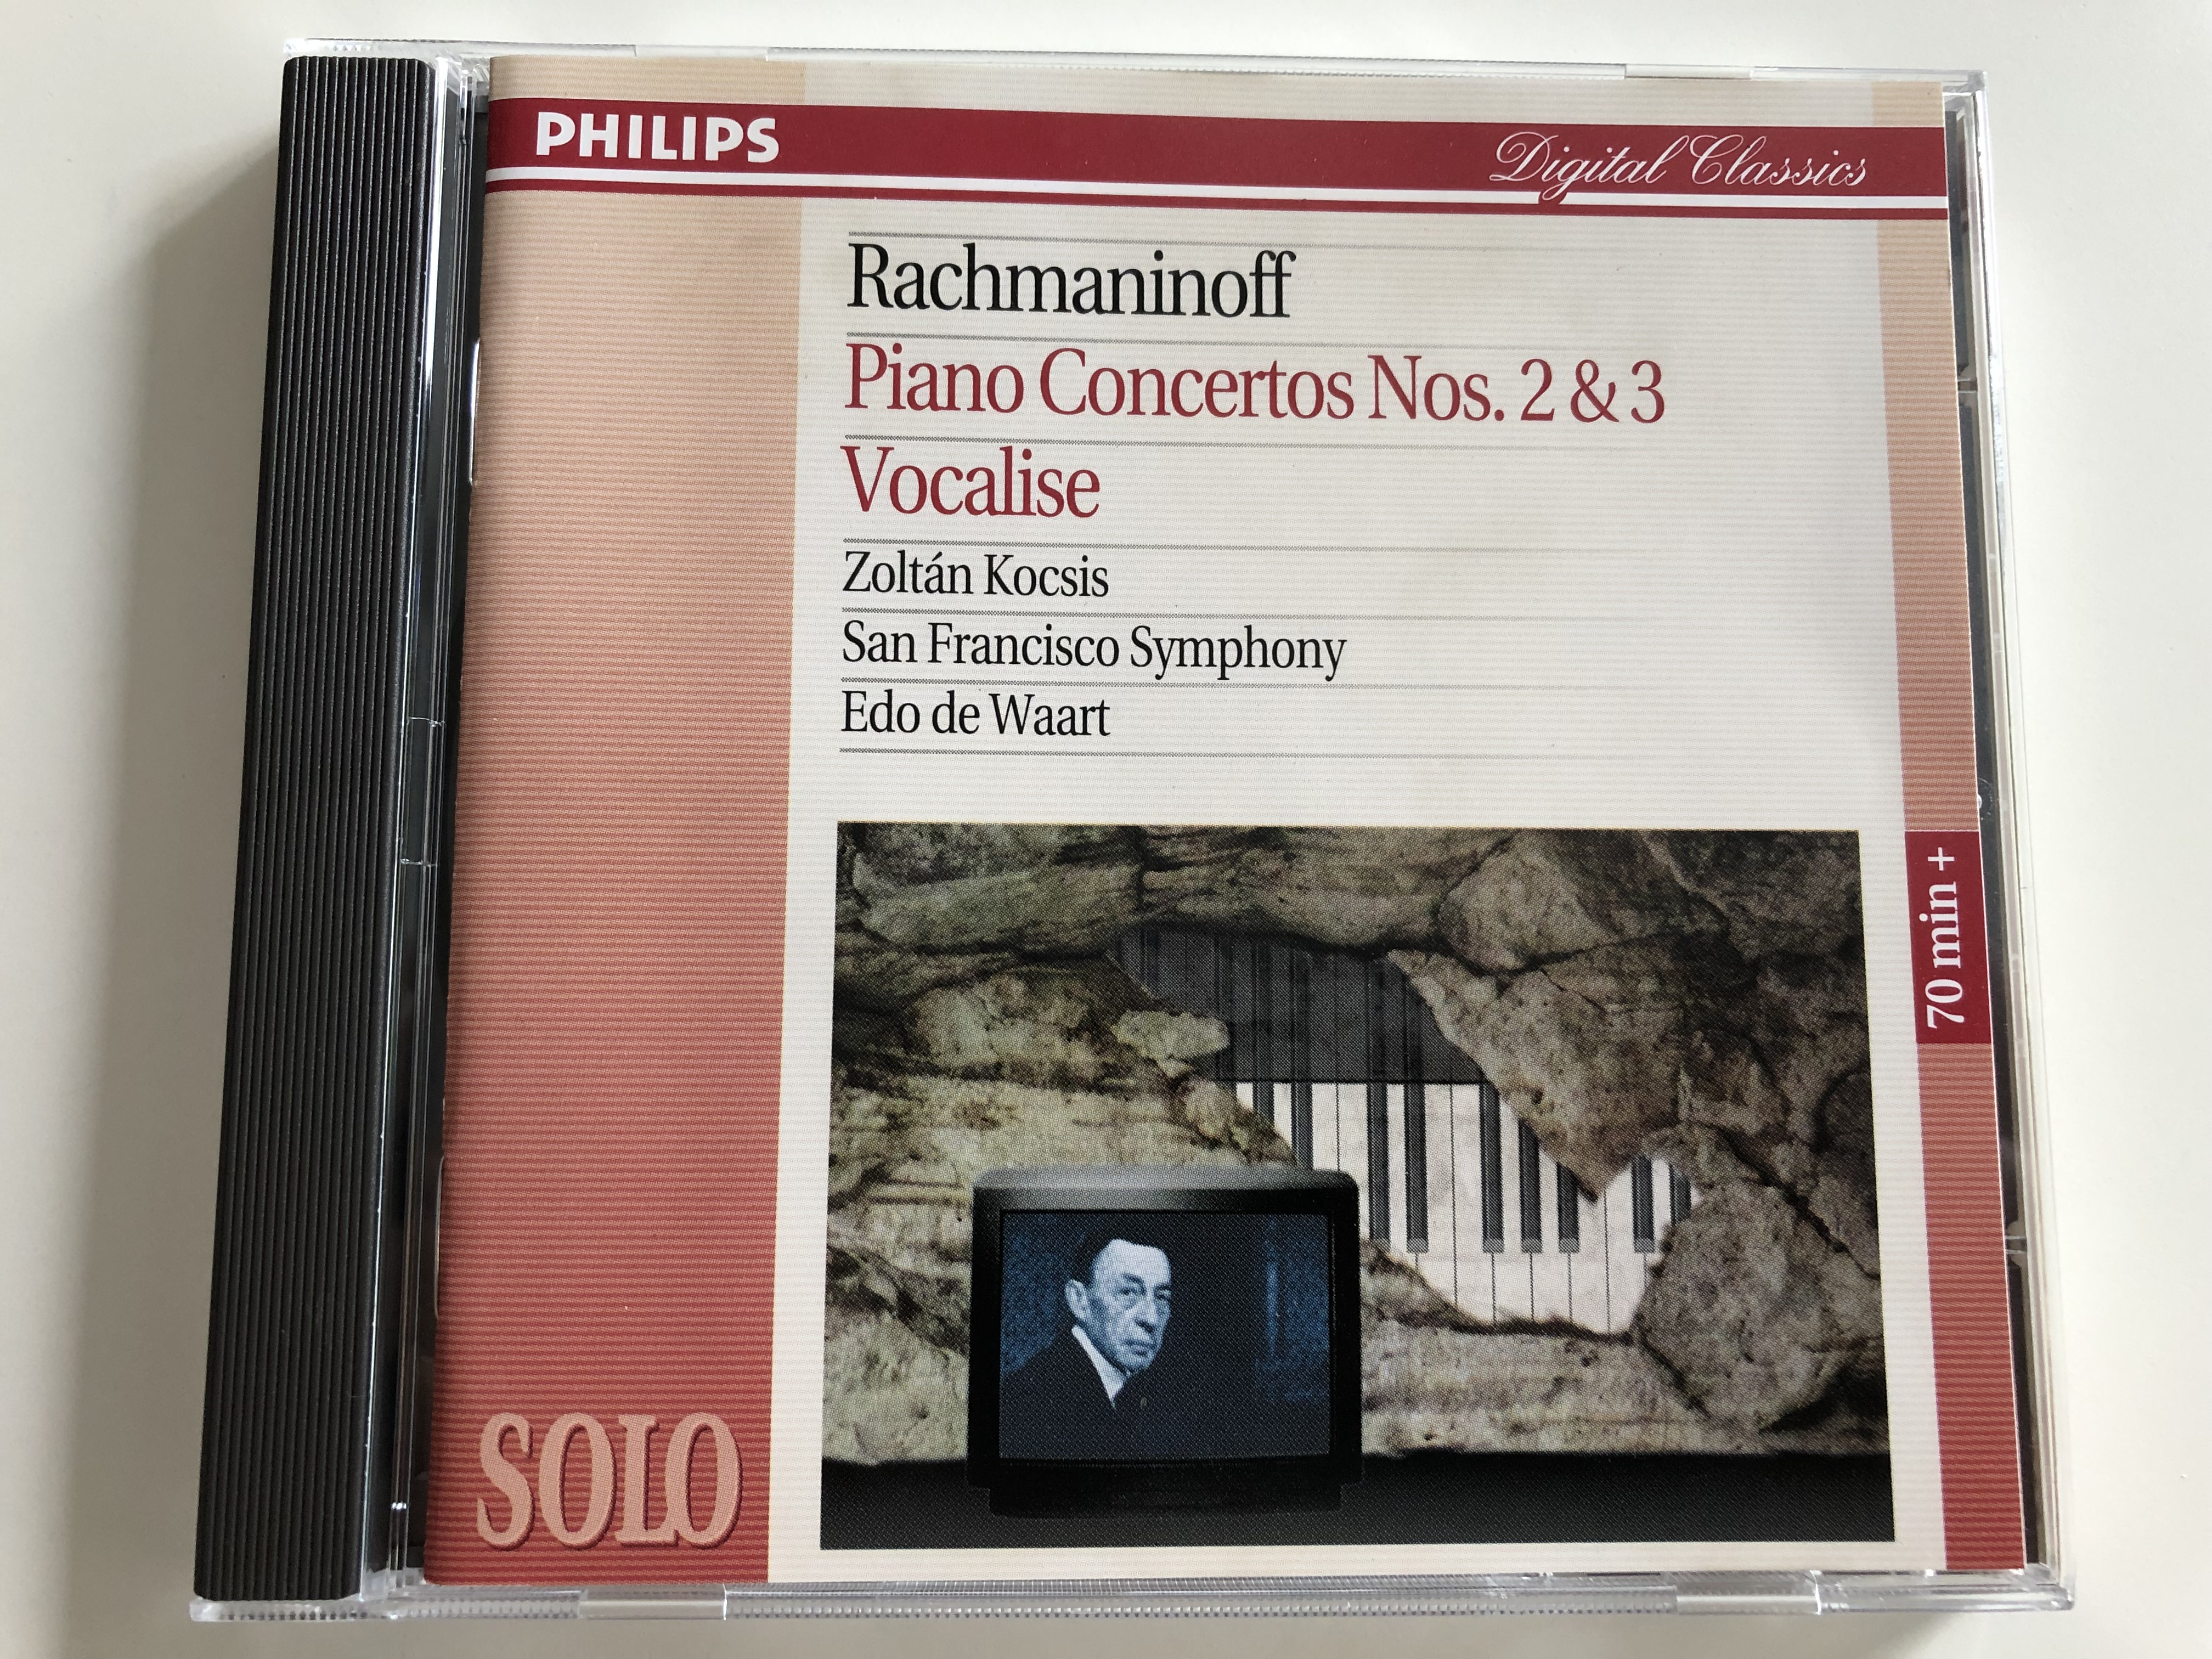 rachmaninoff-piano-concertos-nos.-2-3-vocalise-zolt-n-kocsis-san-francisco-symphony-edo-de-waart-philips-digital-classics-audio-cd-1995-446-199-2-1-.jpg